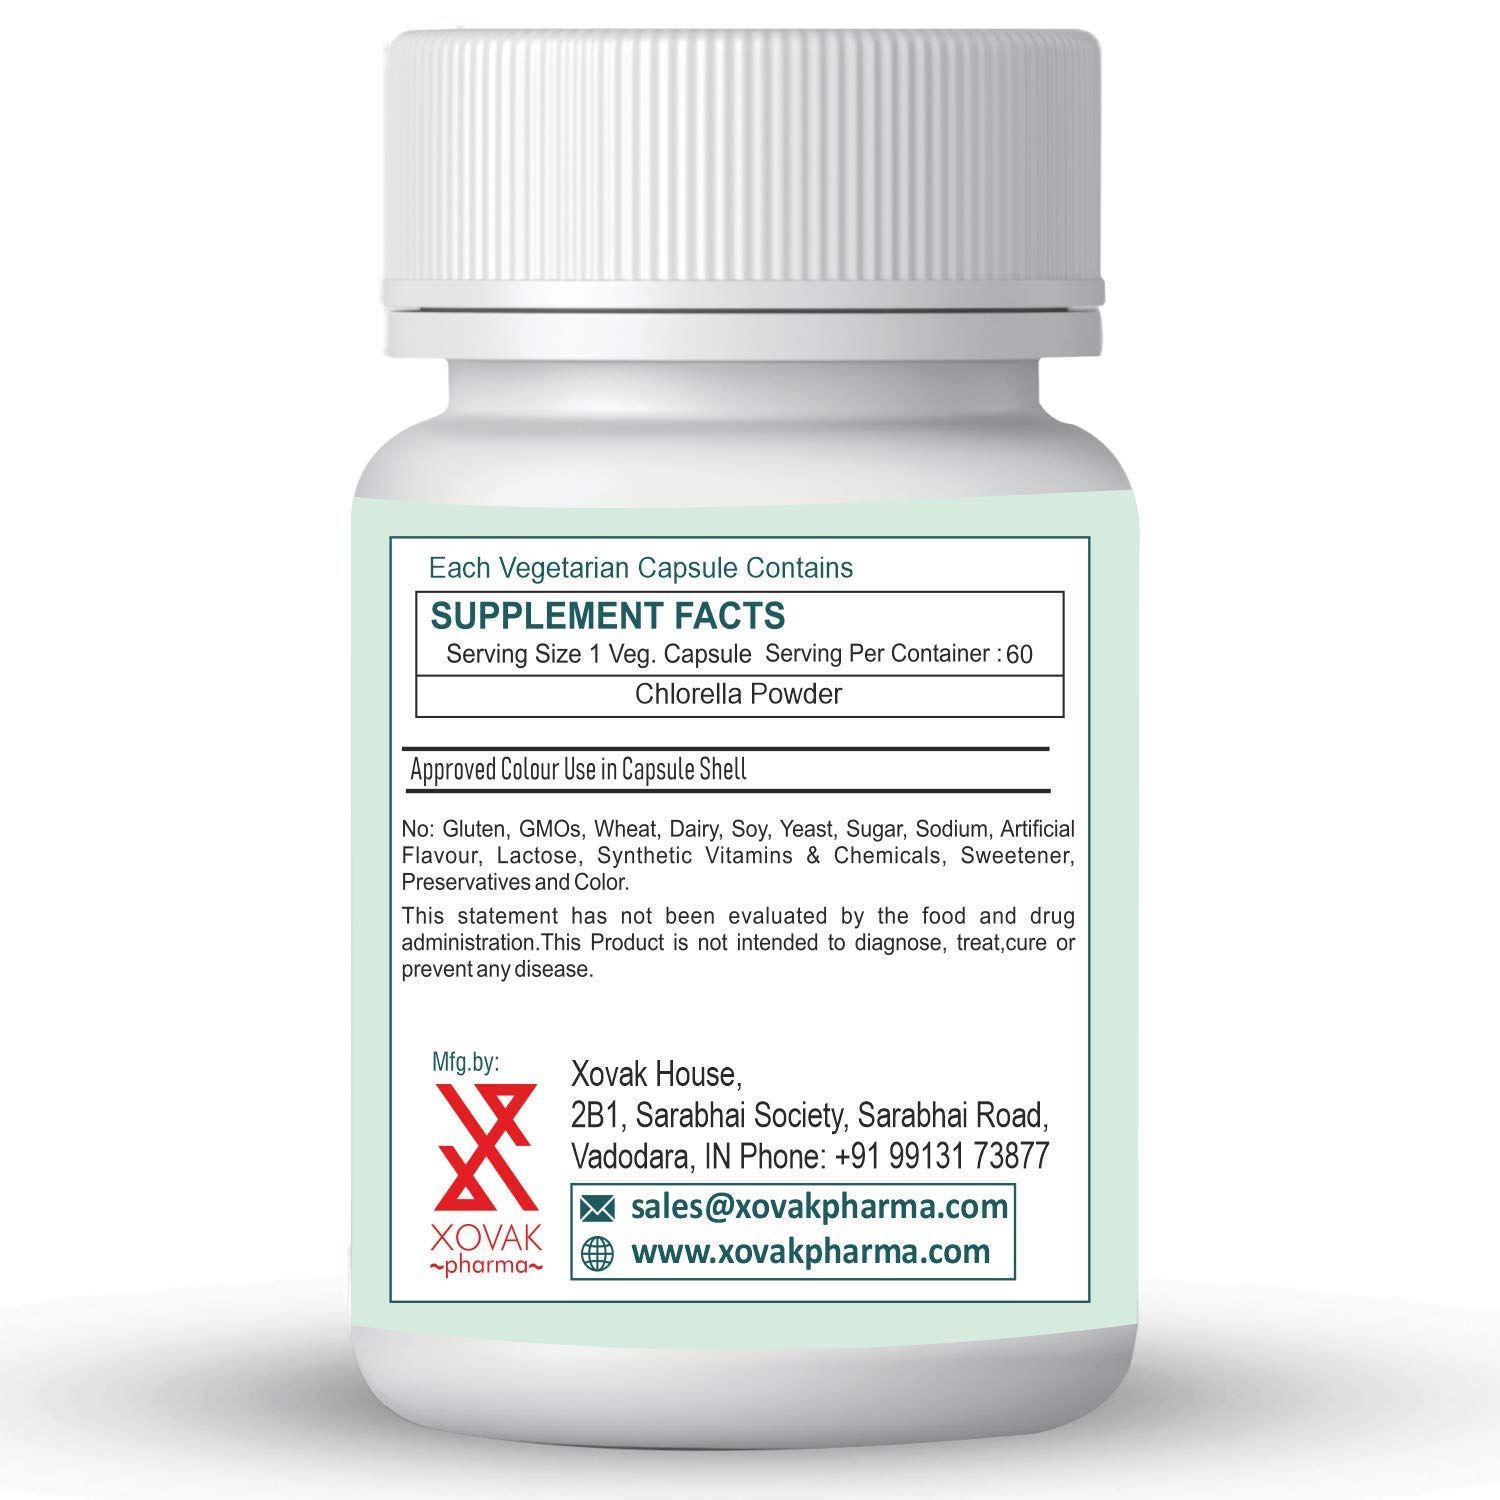 Xovak Pharma Organic Chlorella Capsules Image